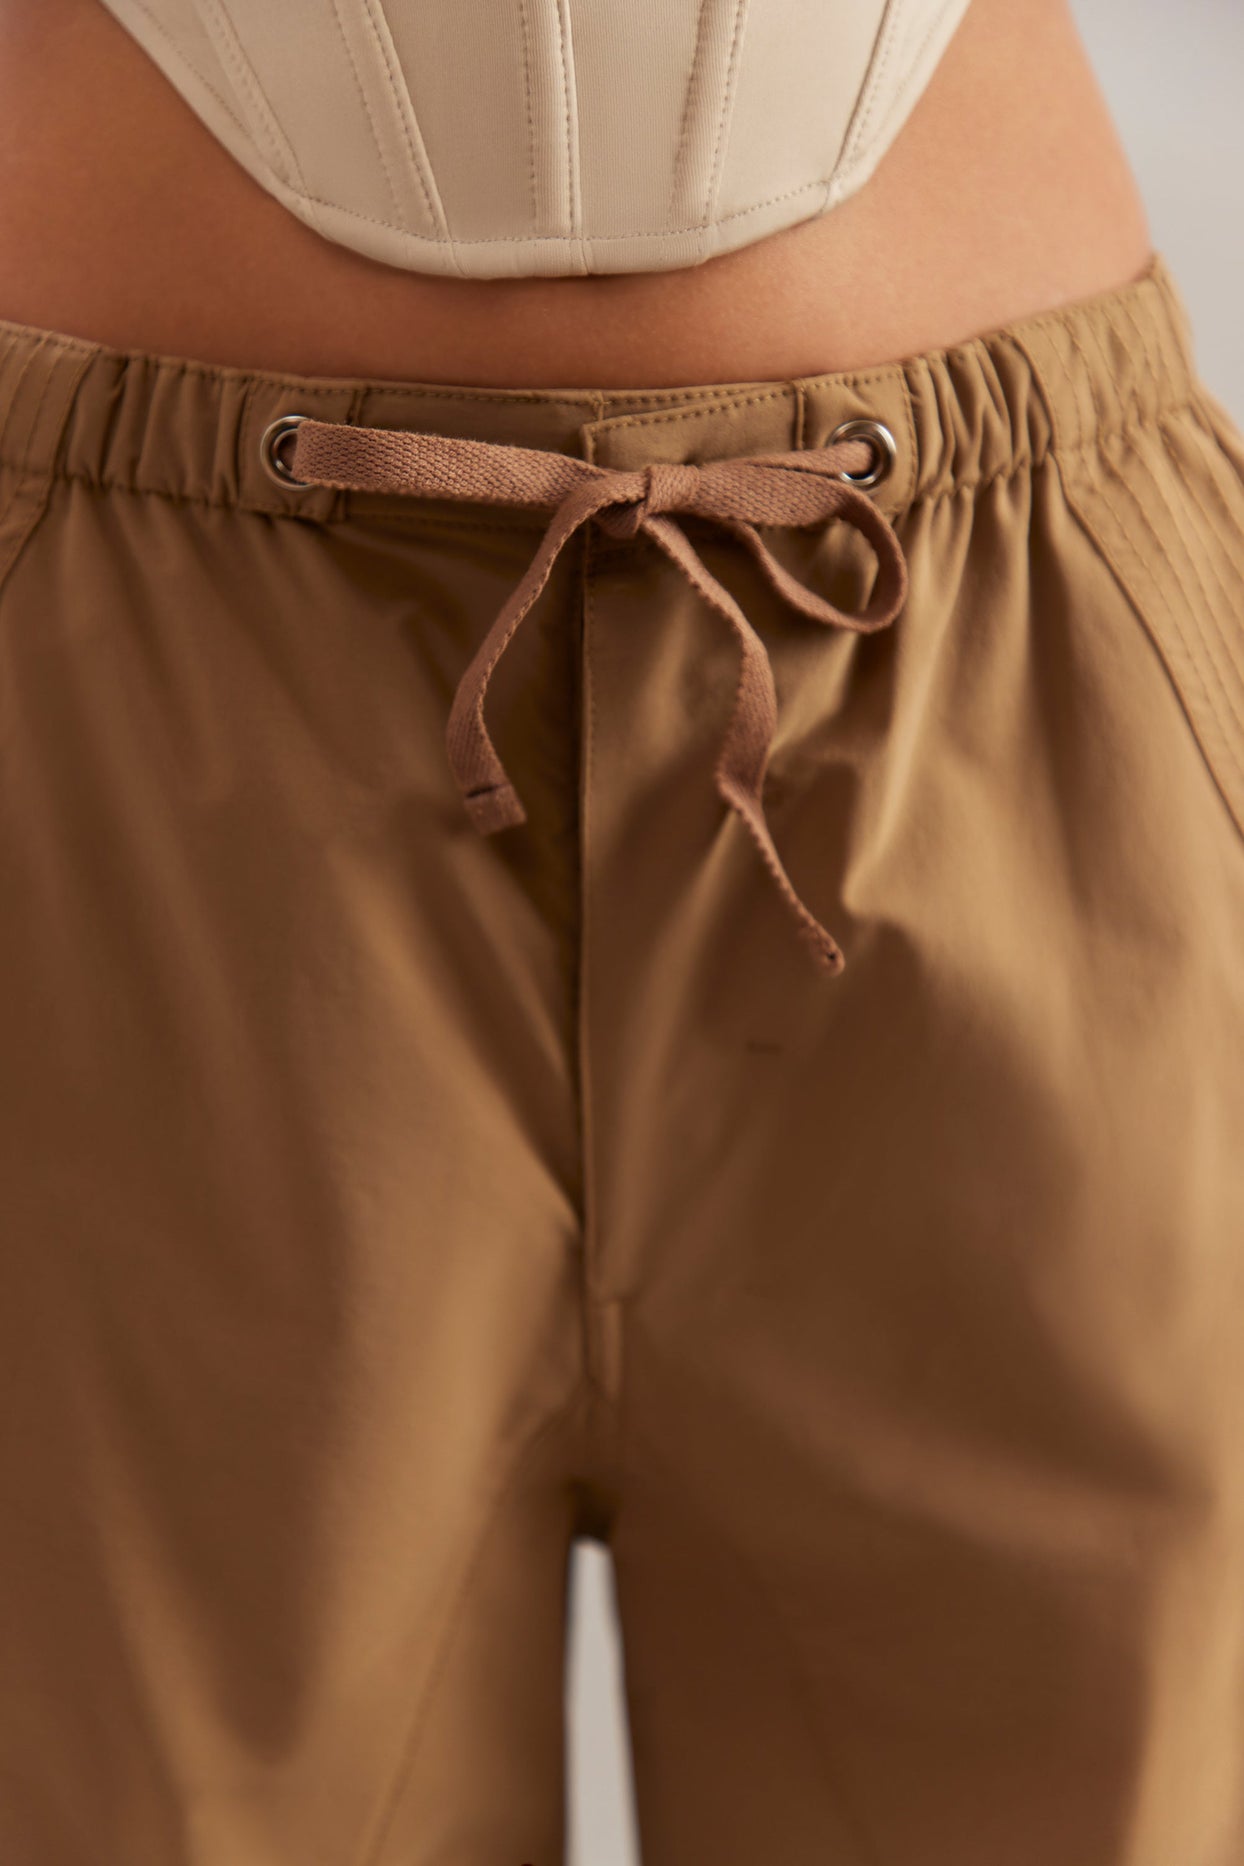 Pantalones cargo de pernera ancha Petite en color canela